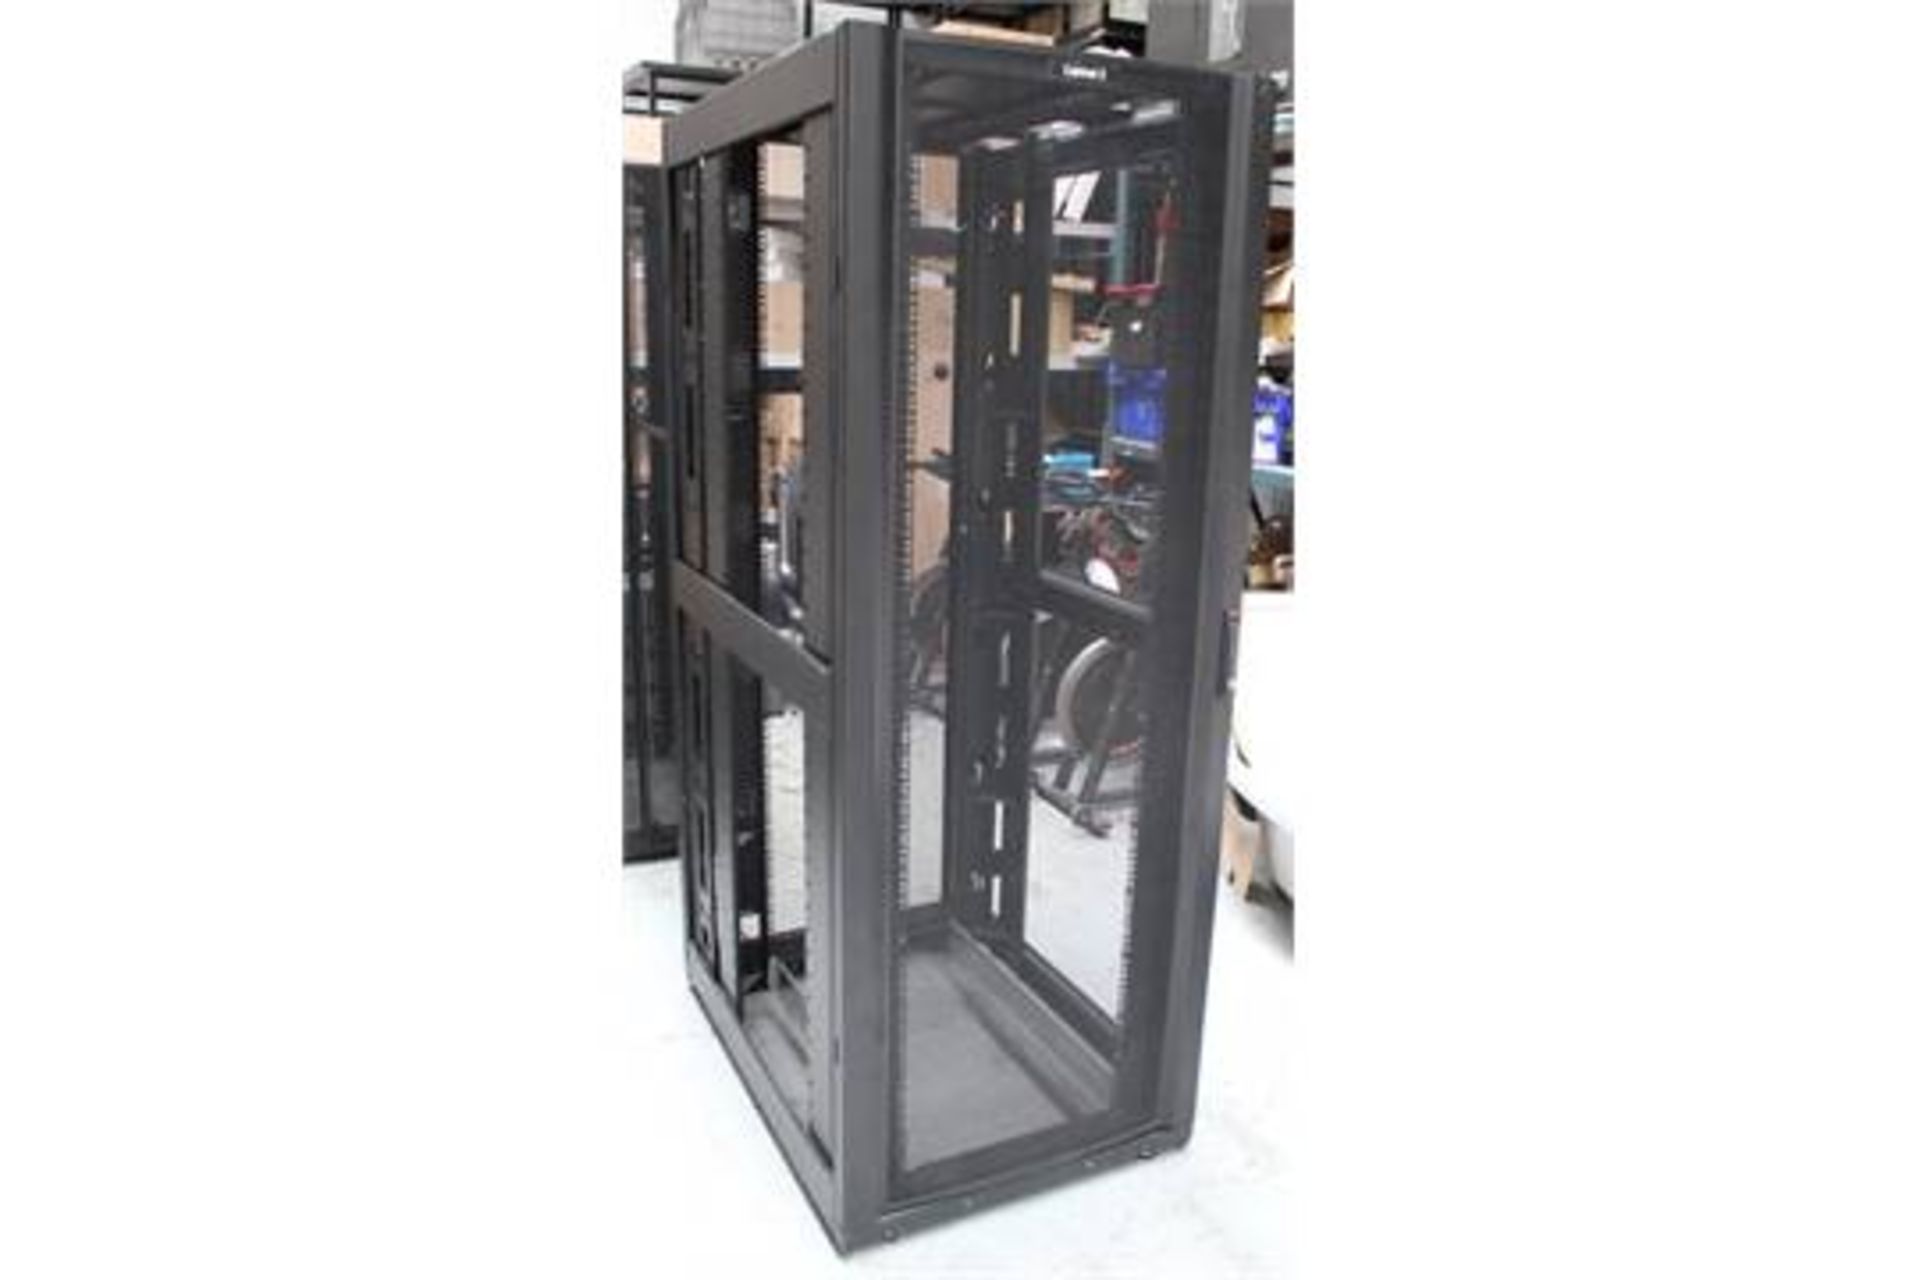 1 x APC Netshelter 42U Server Enclosure - AR3100 Black - Suitable For 19 Inch Compliant Equipment - - Image 2 of 4